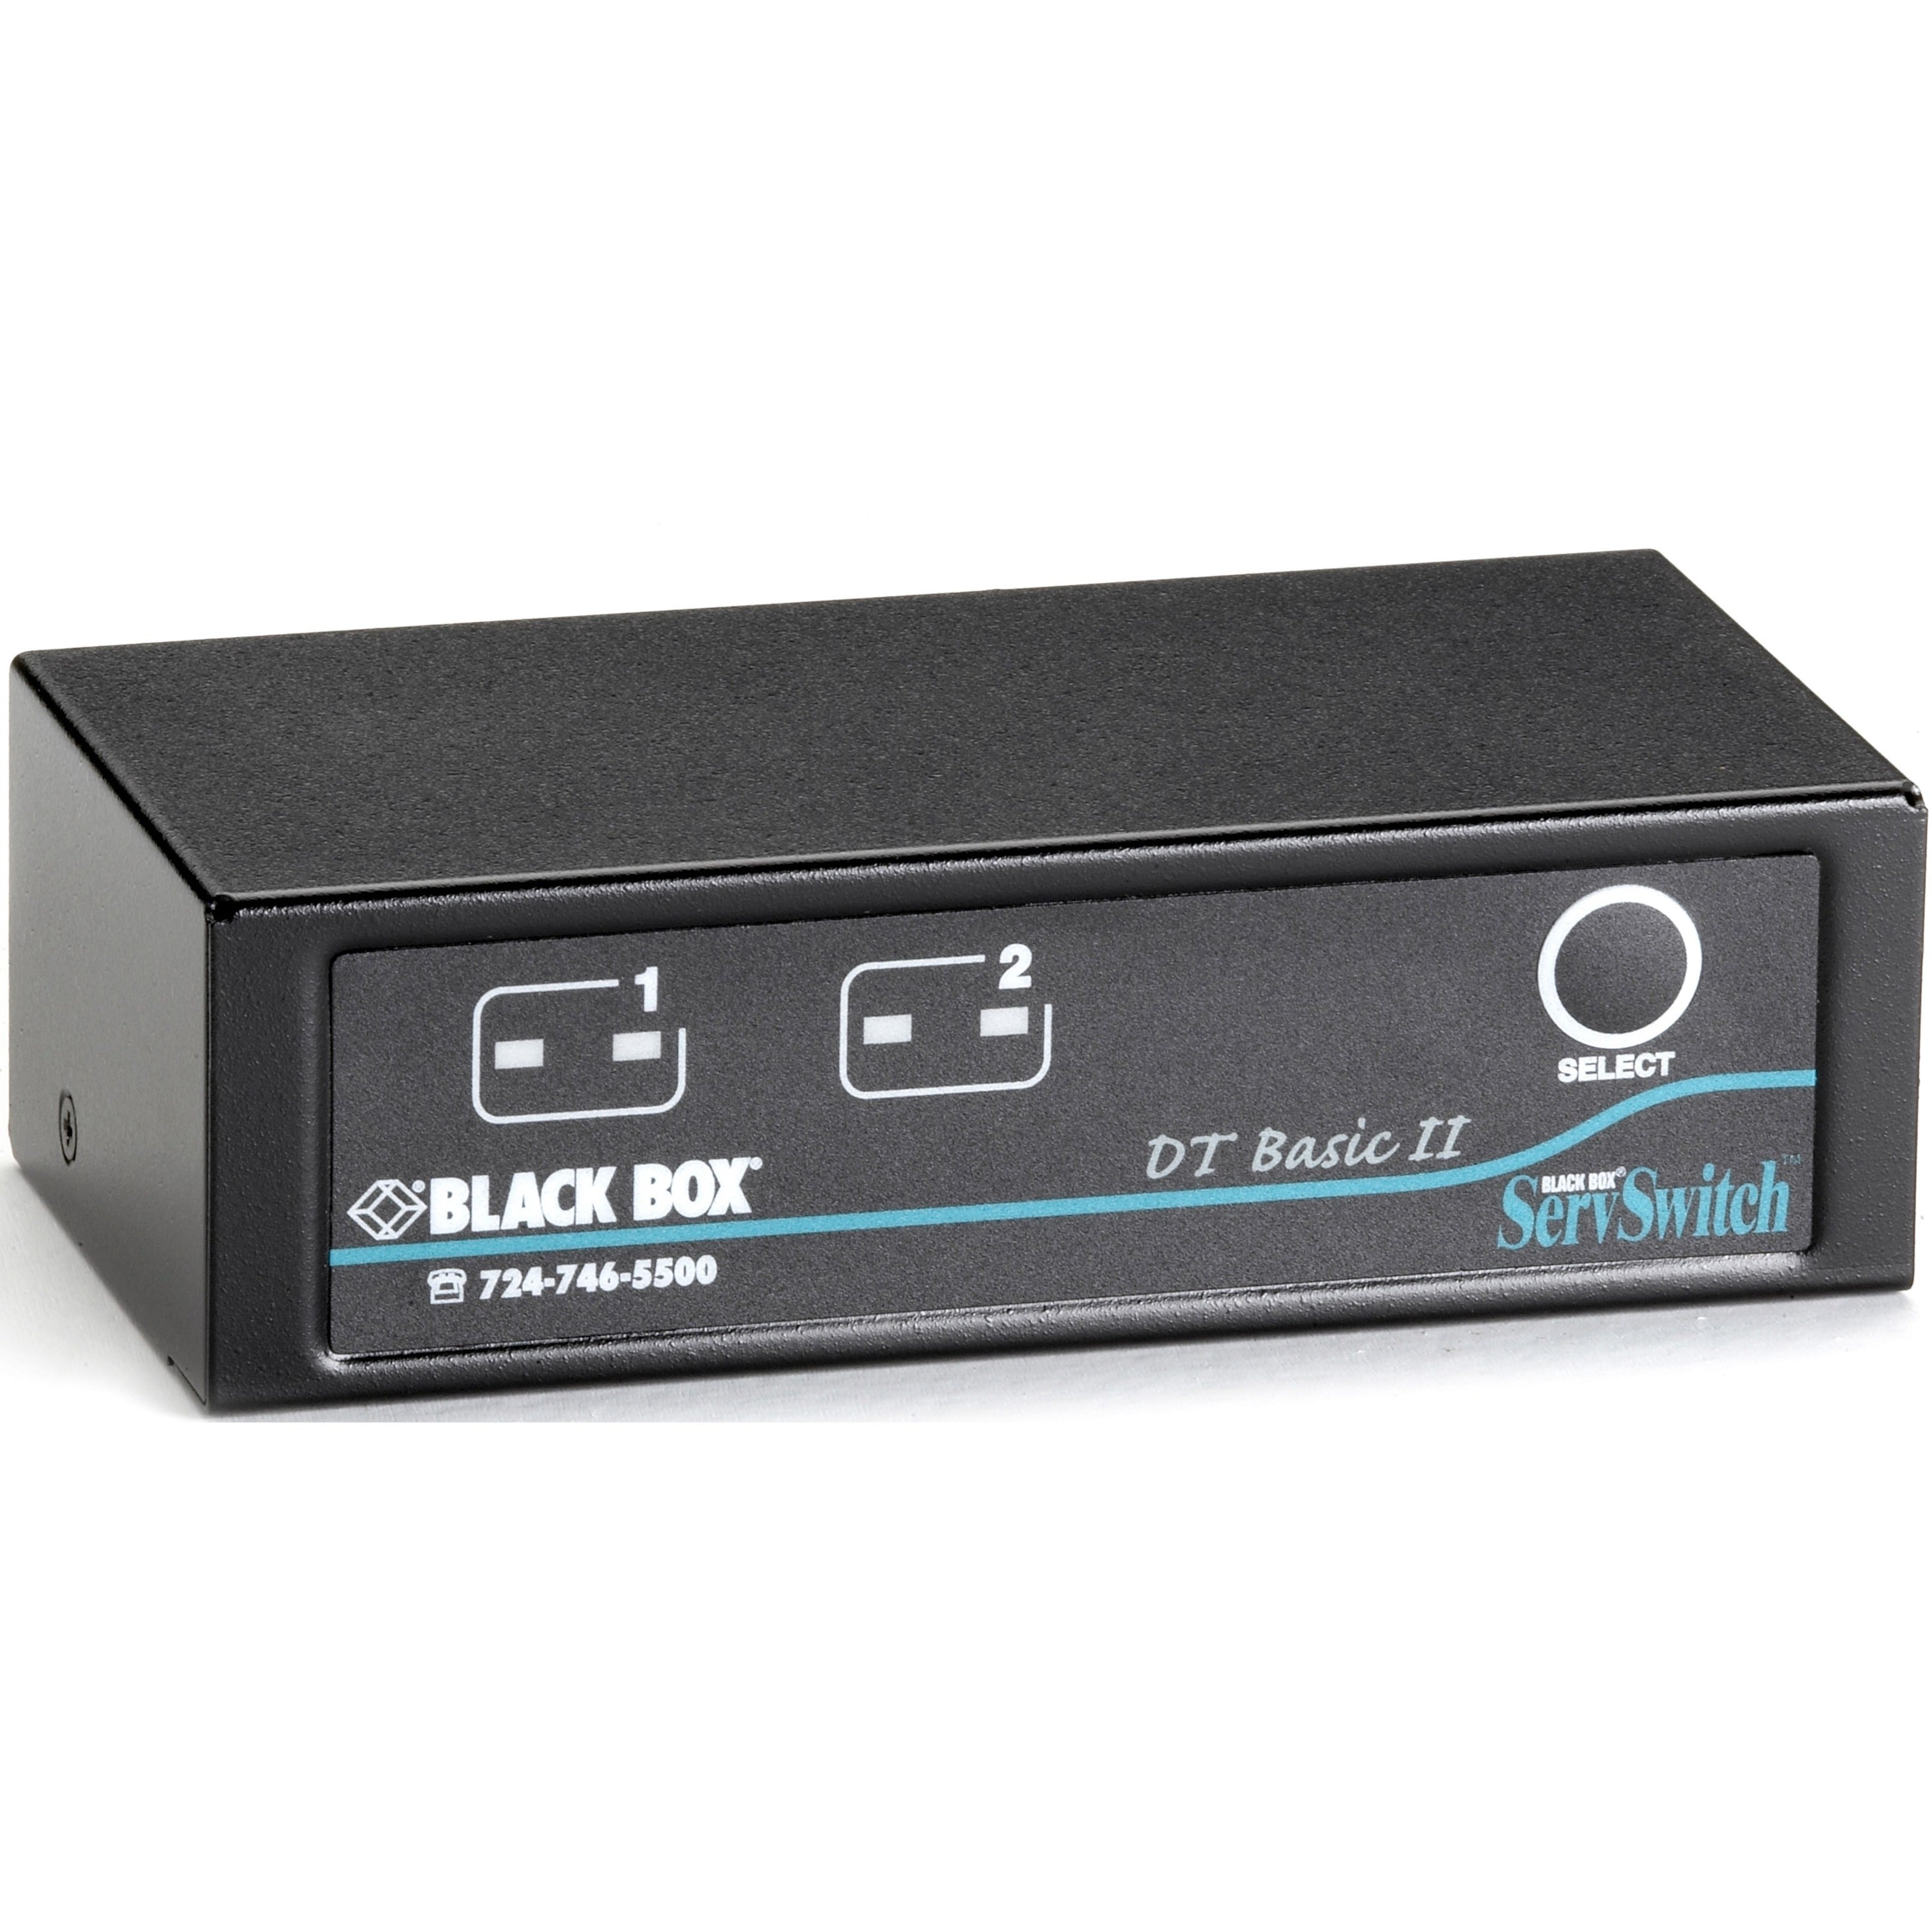 Black Box KV7022A-K ServSwitch DT Basic II Kit, 2-Port KVM Switchbox